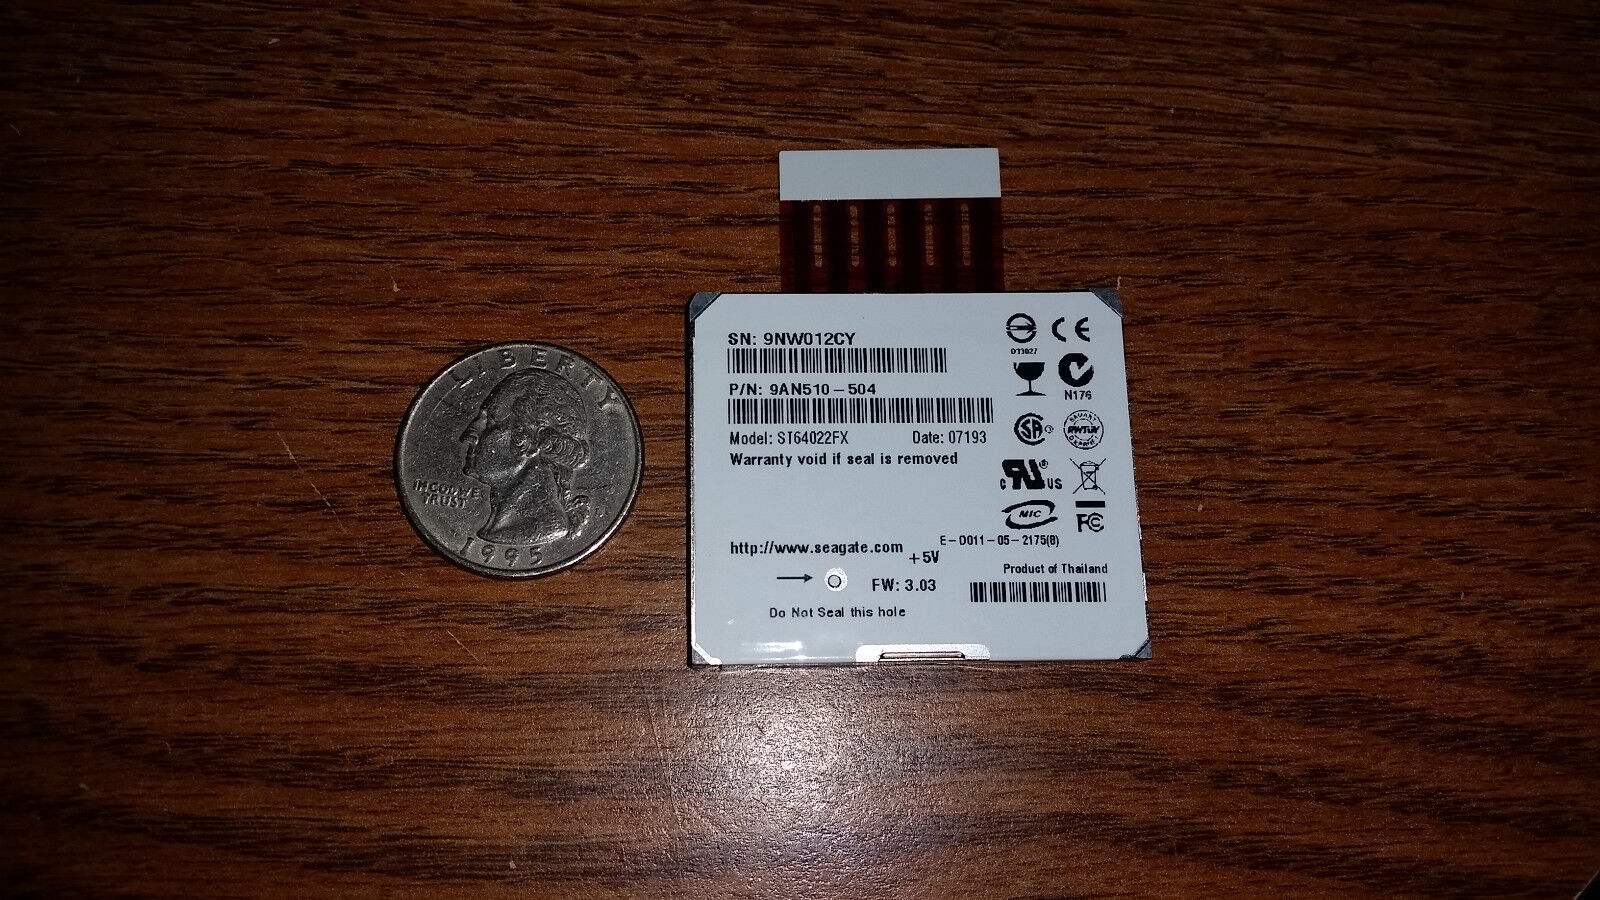 (Lot of 20)  Seagate ST1.2 Series 4GB Plug-In Module 3600RPM (ST64022FX) HDD